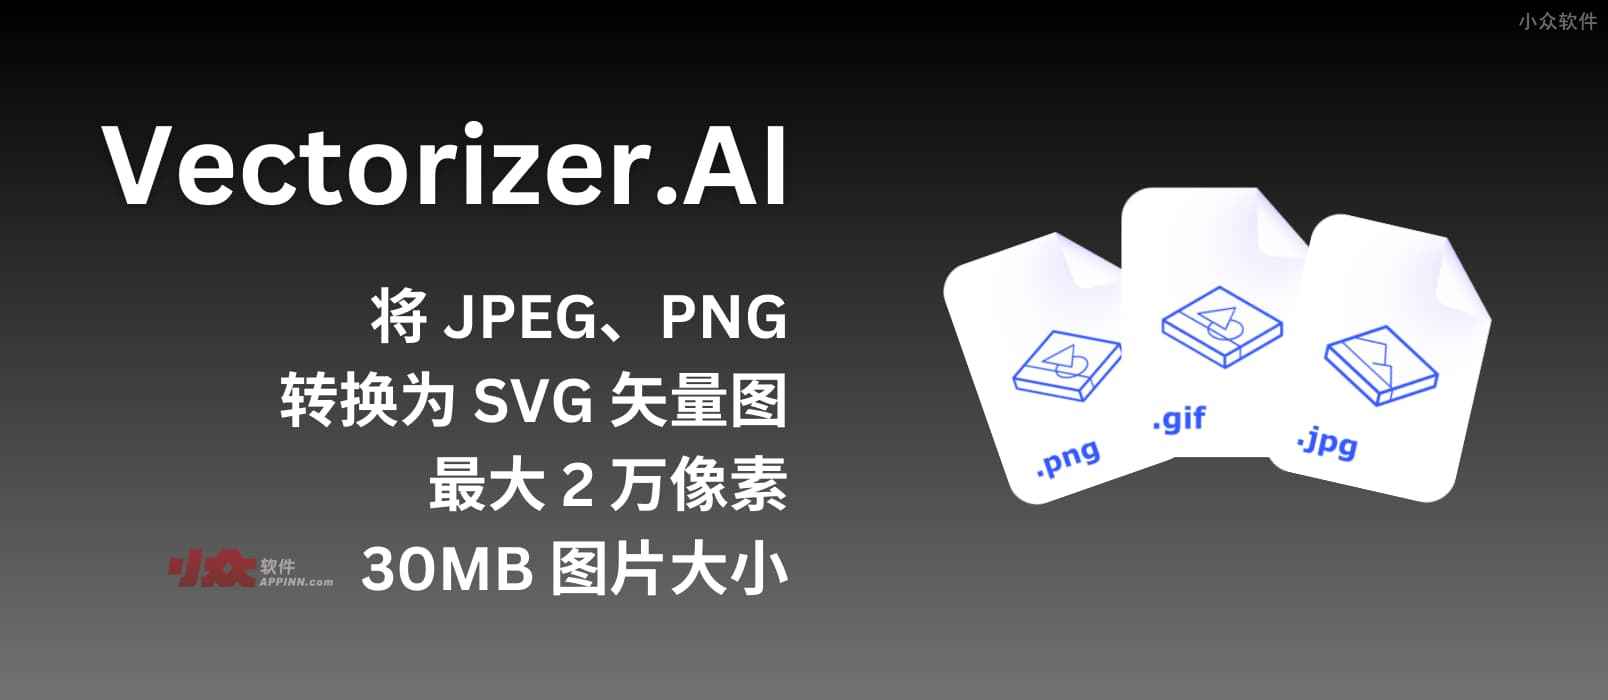 Vectorizer.AI – 将 JPEG 和 PNG 位图转换为 SVG 矢量图，可无限放大。支持最大 2 万像素、30MB 图片大小【已收费】